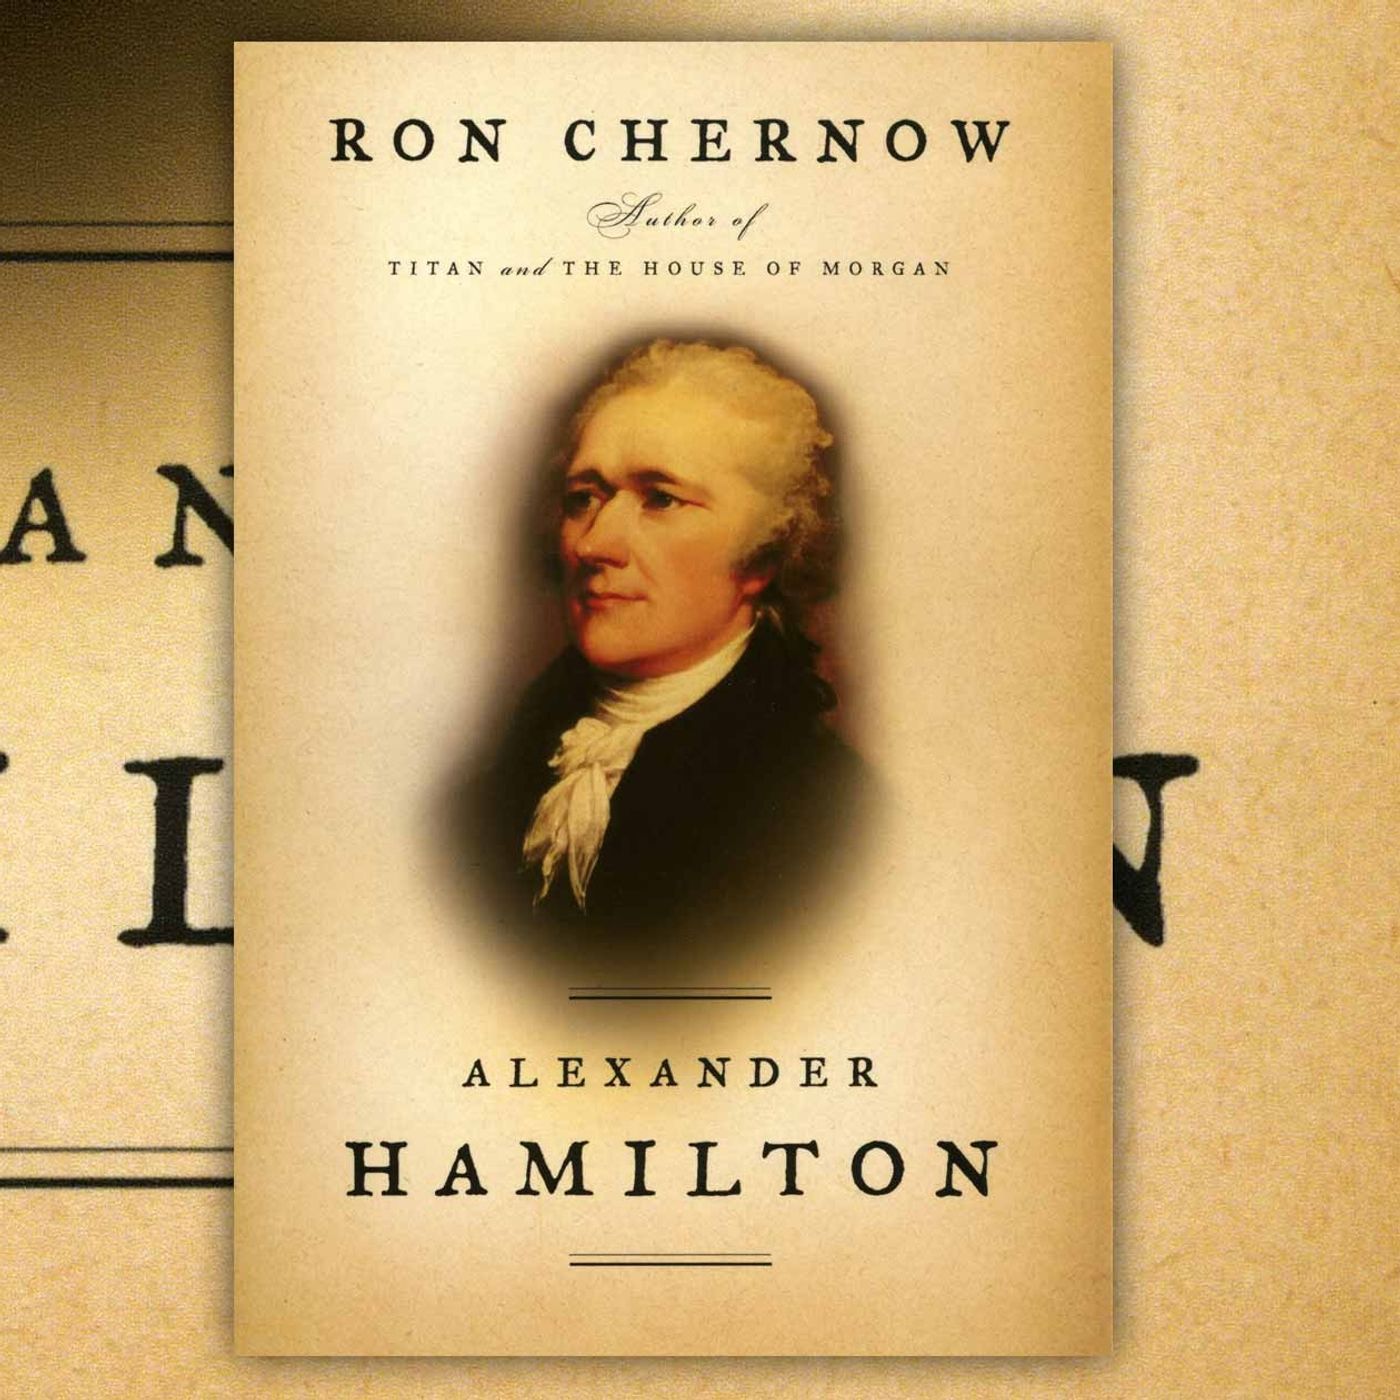 hamilton biography chernow